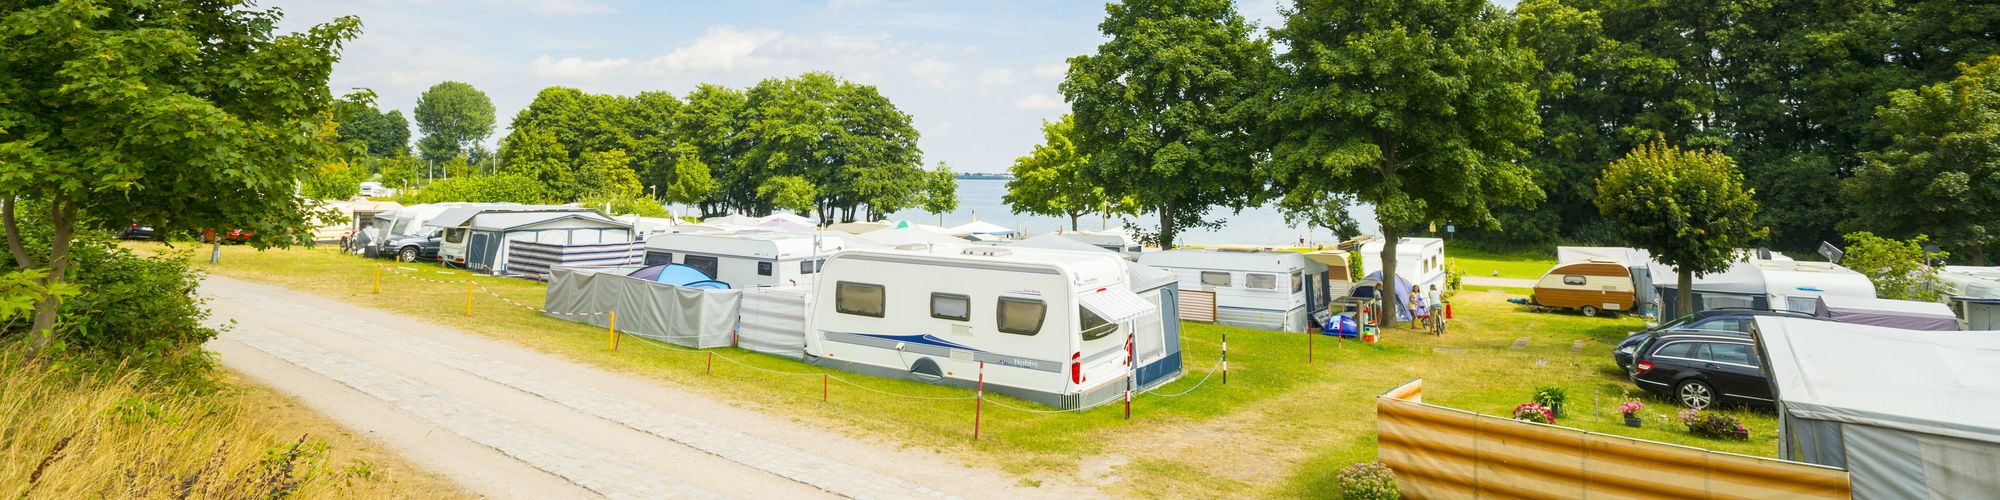 Campingplatz Seehof GmbH